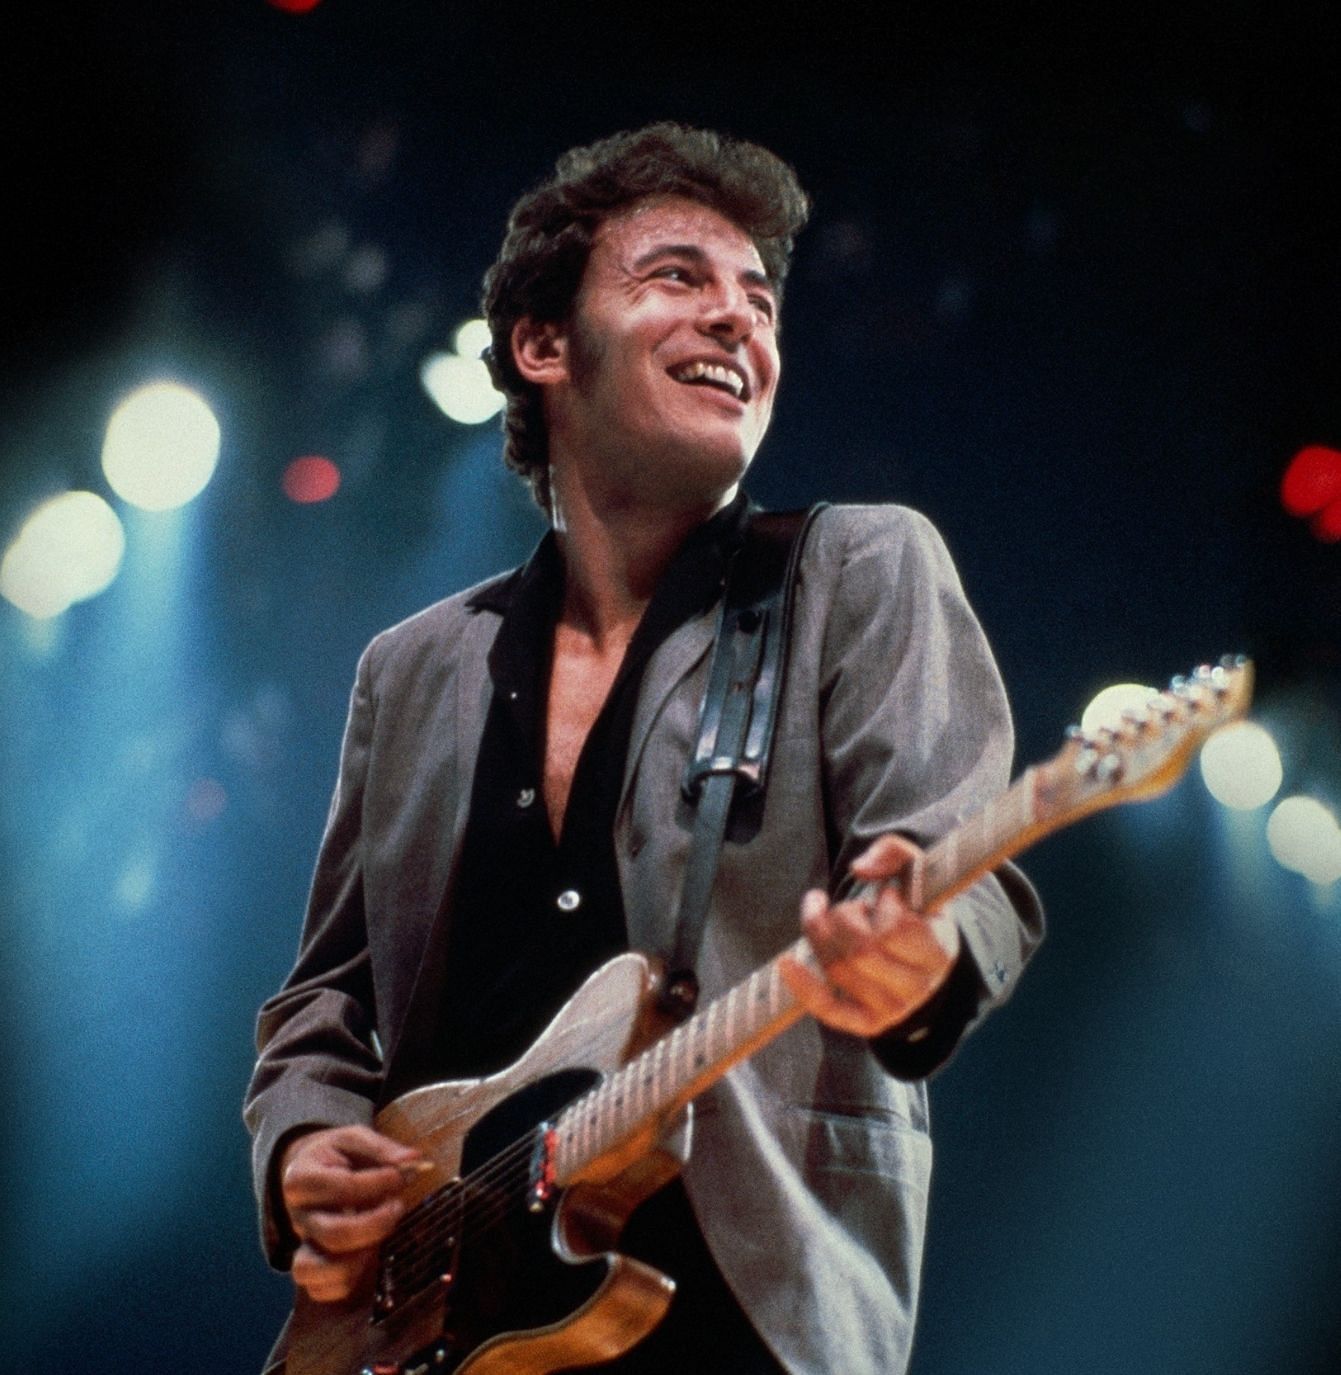 Bruce Springsteen has won 20 Grammy awards. (Image via Instagram)